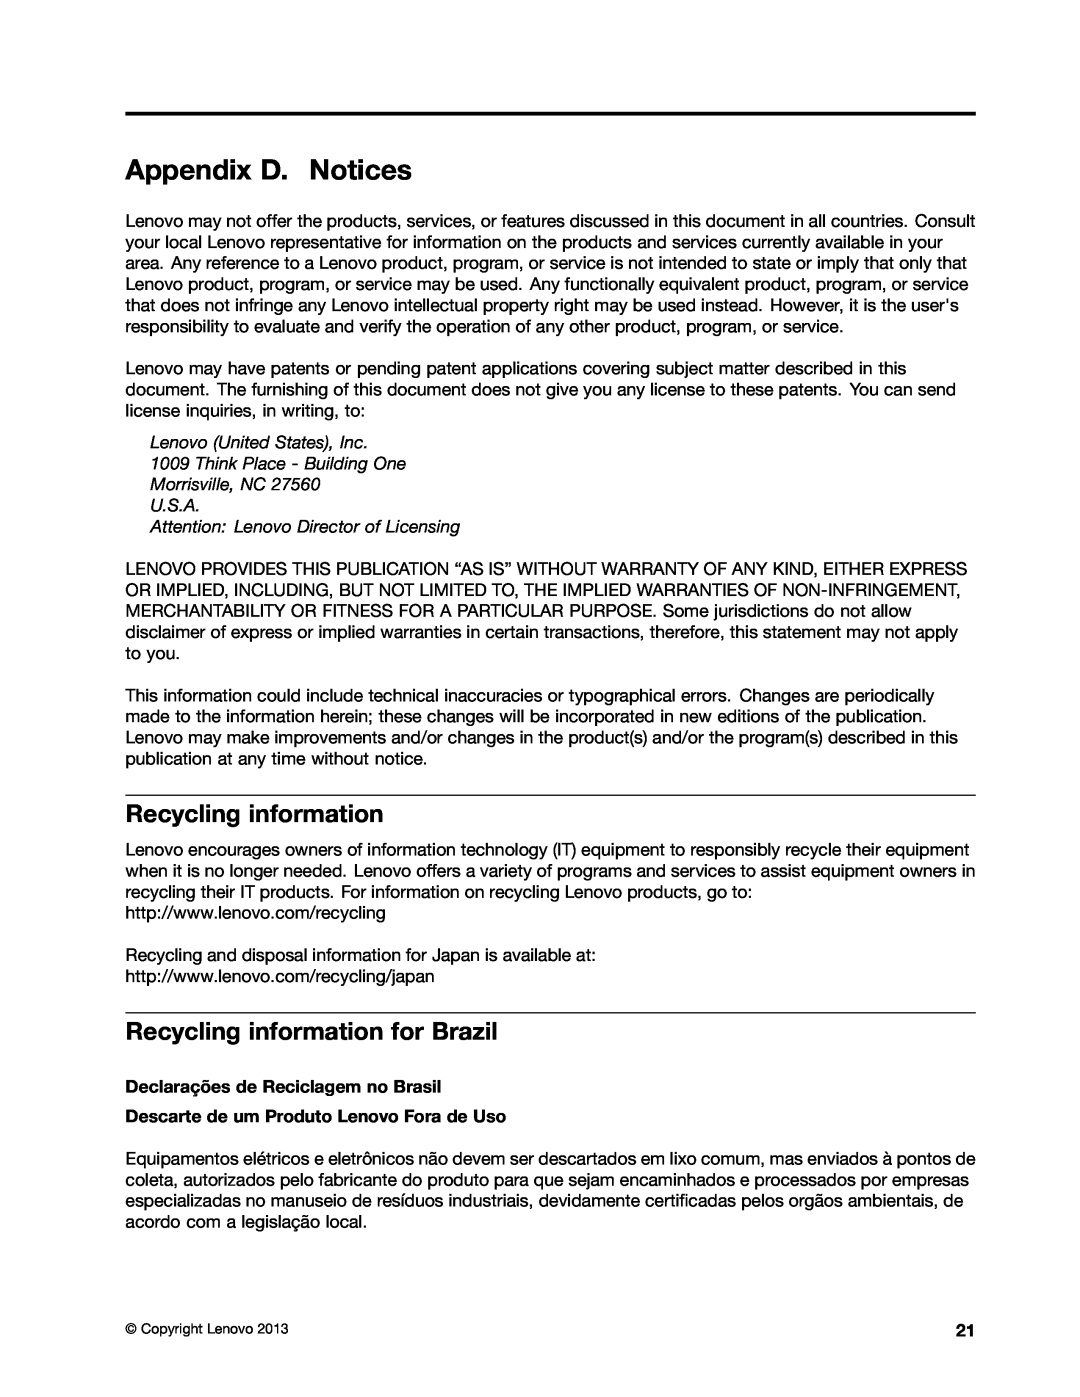 Lenovo NVS 315 manual Appendix D. Notices, Lenovo United States, Inc, Think Place - Building One Morrisville, NC 